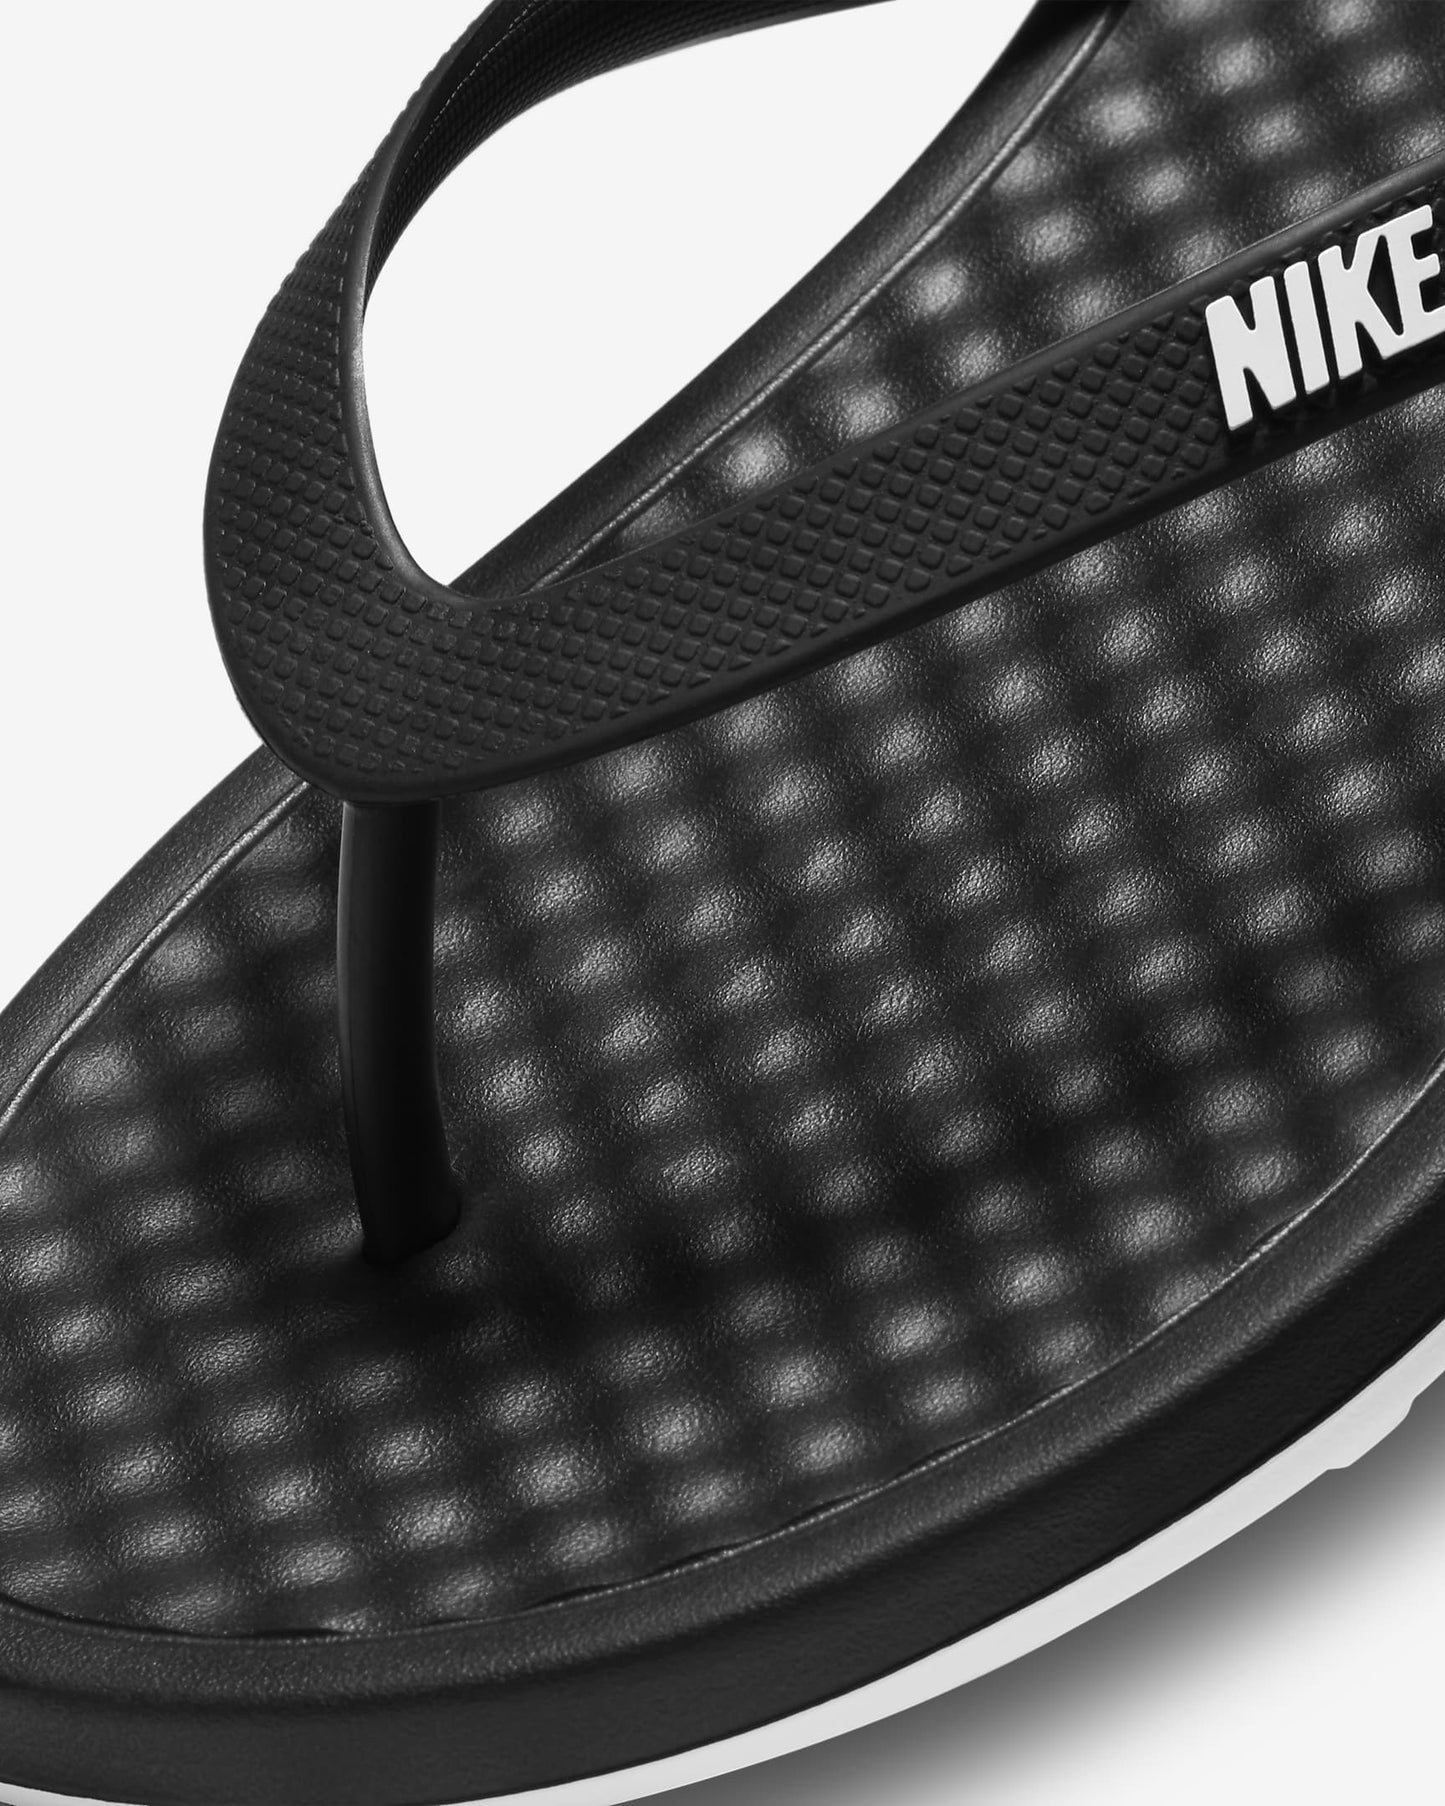 Nike Women's On Deck, Black/Black/White